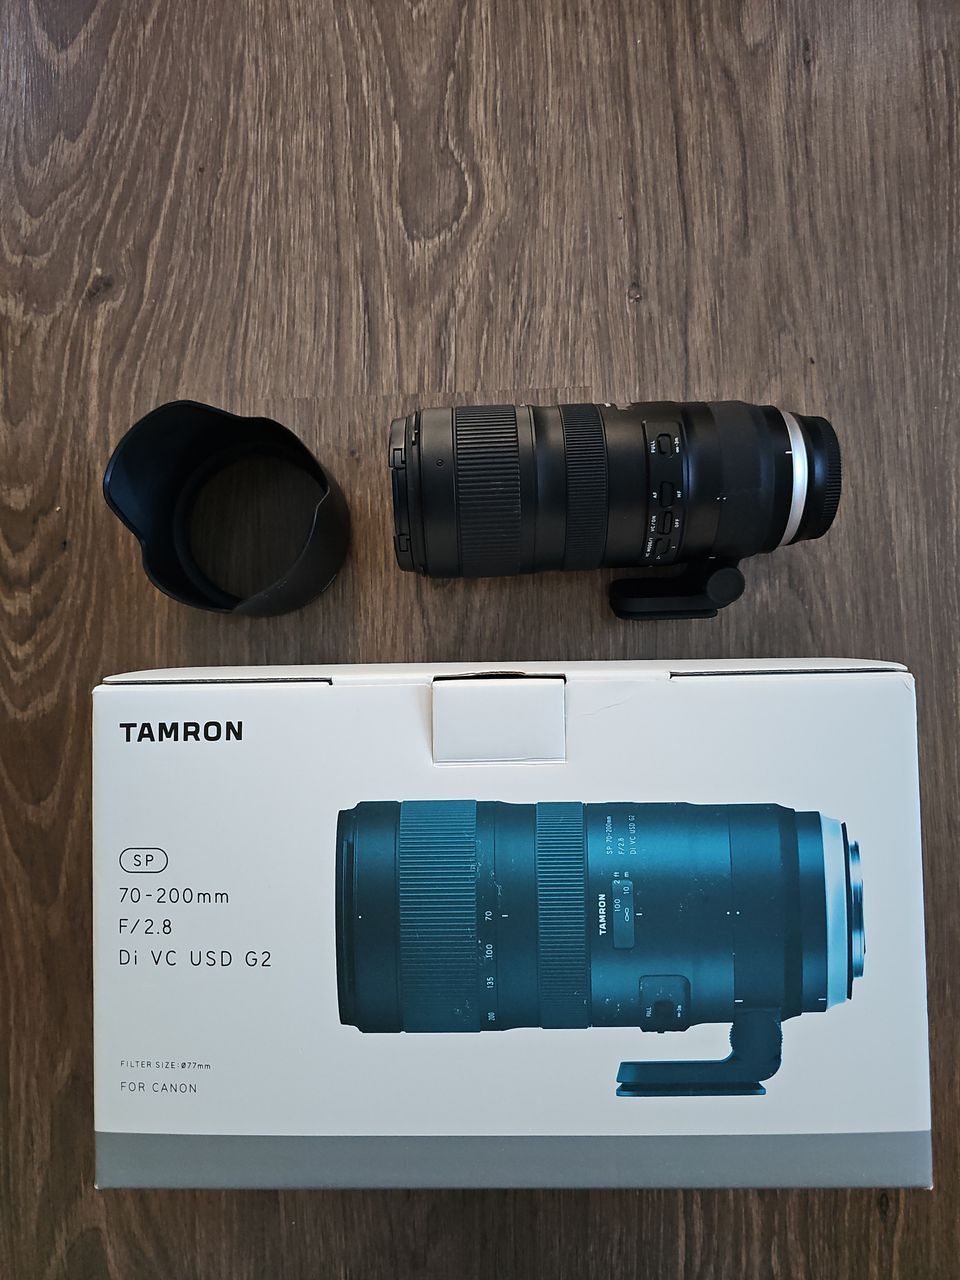 Tamron 70-200mm f2.8 Di VC USD G2